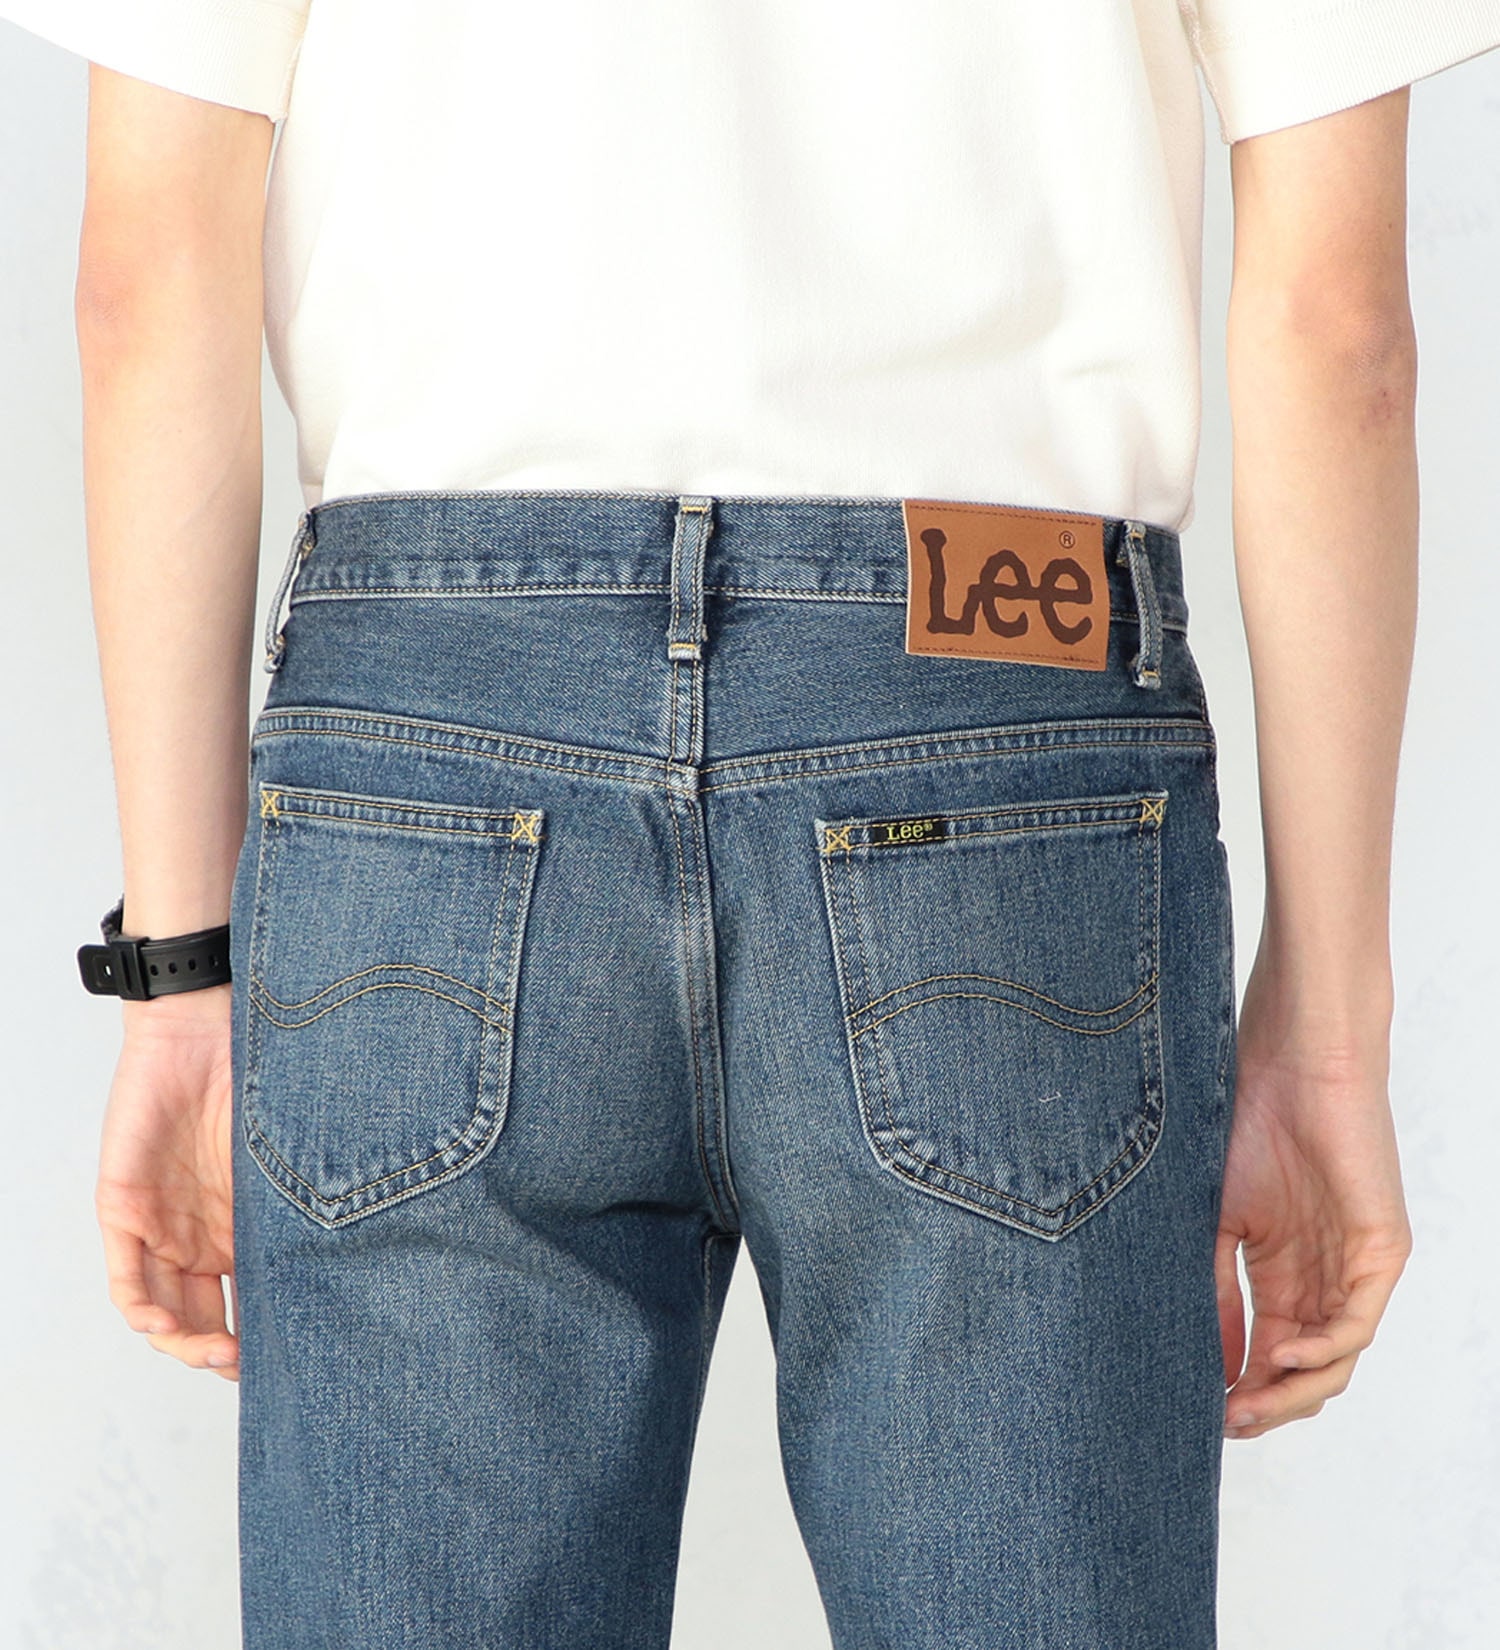 Lee(リー)のAMERICAN STANDARD 202ベルボトムジーンズ|パンツ/デニムパンツ/メンズ|中色ブルー